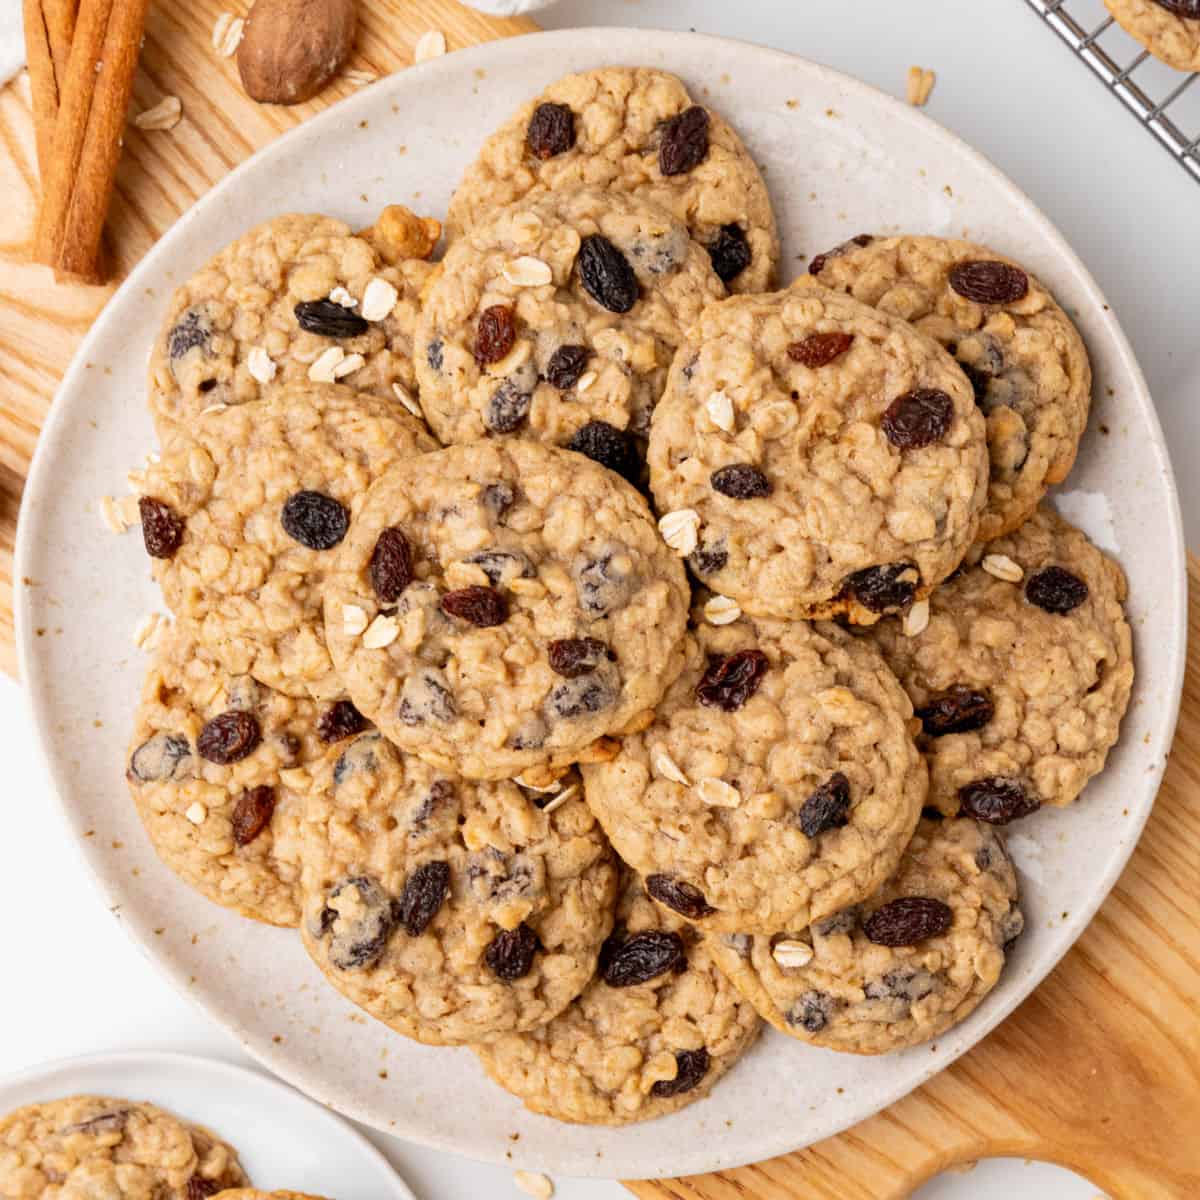 https://realhousemoms.com/wp-content/uploads/Spiced-Oatmeal-Raisin-Cookies-RECIPE-CARD.jpg